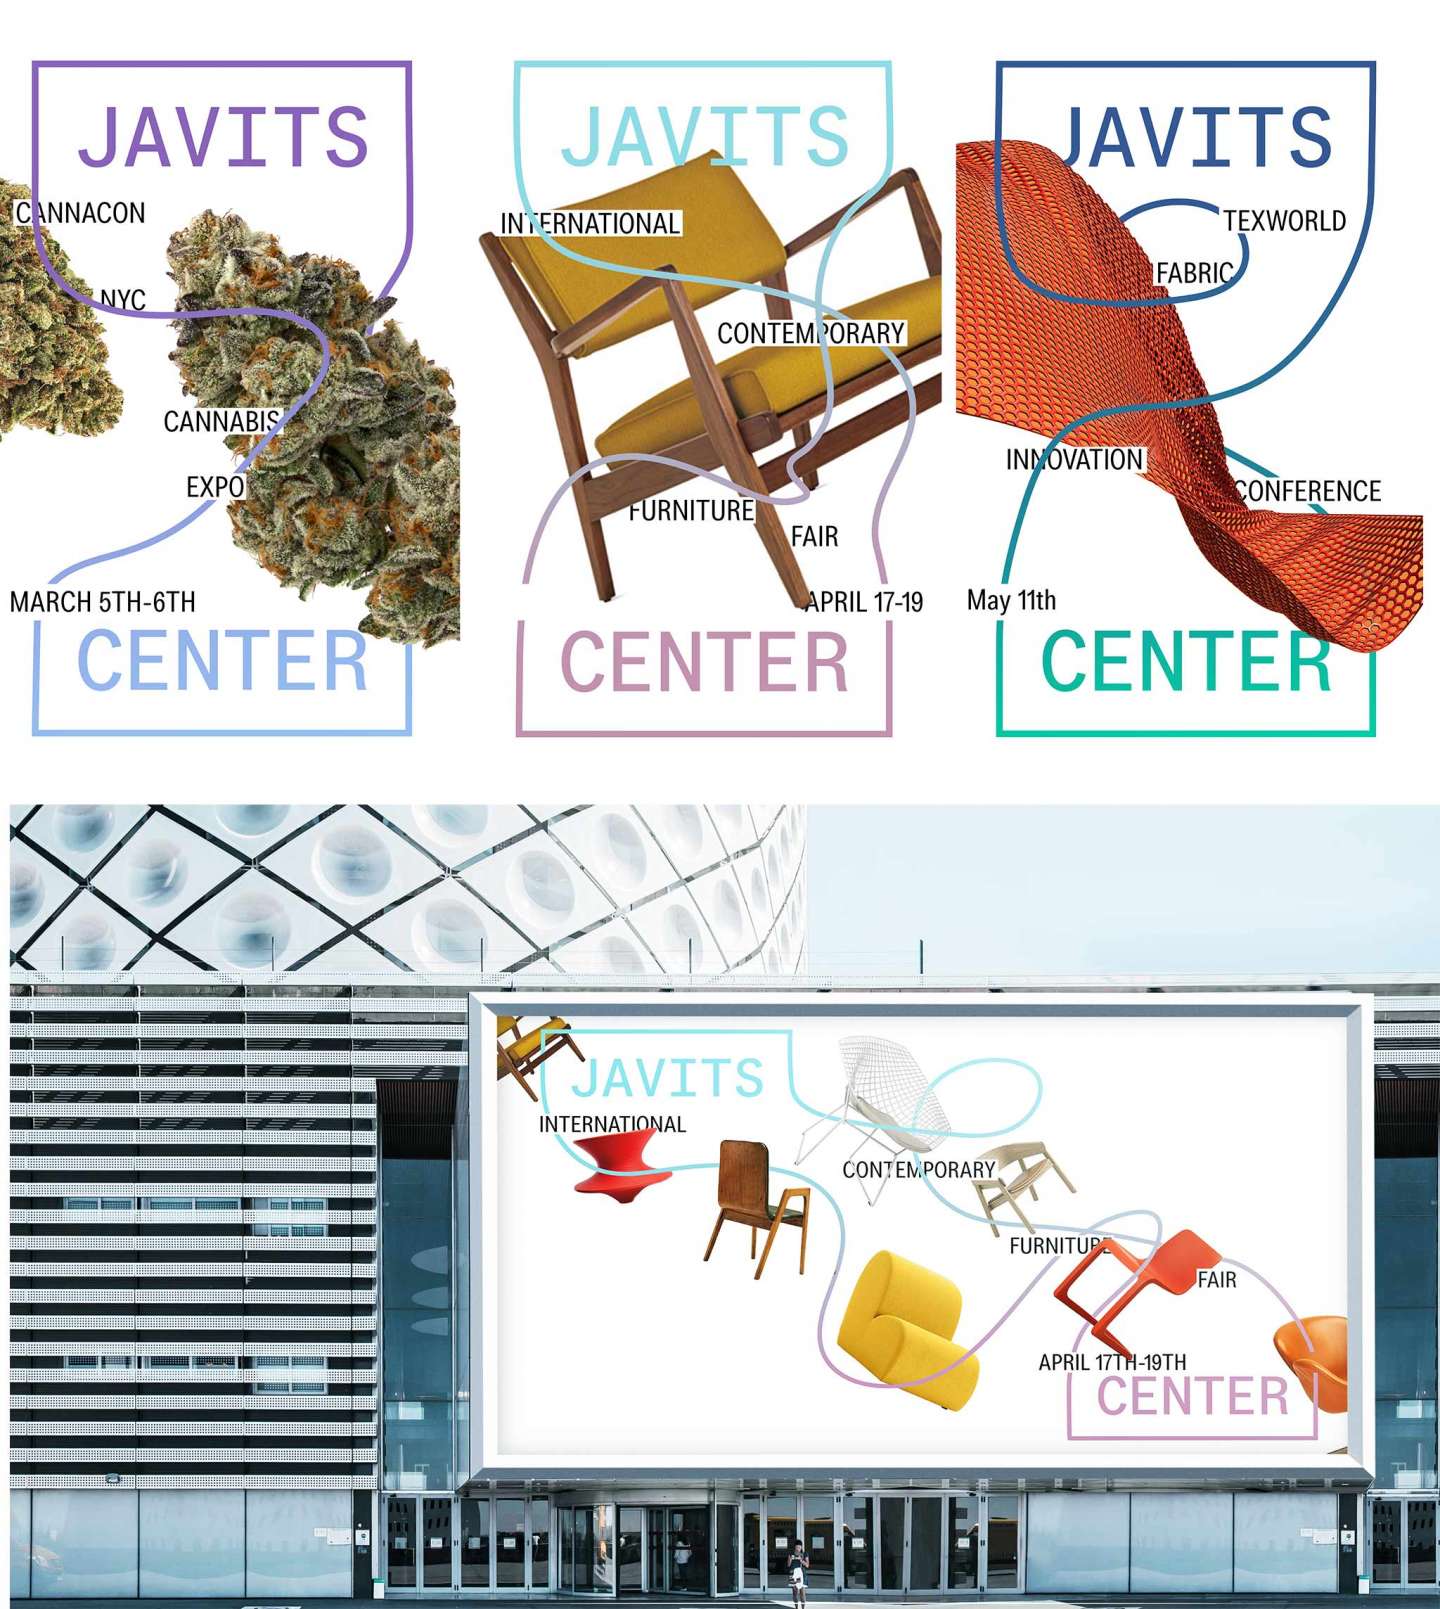 The Javits Center